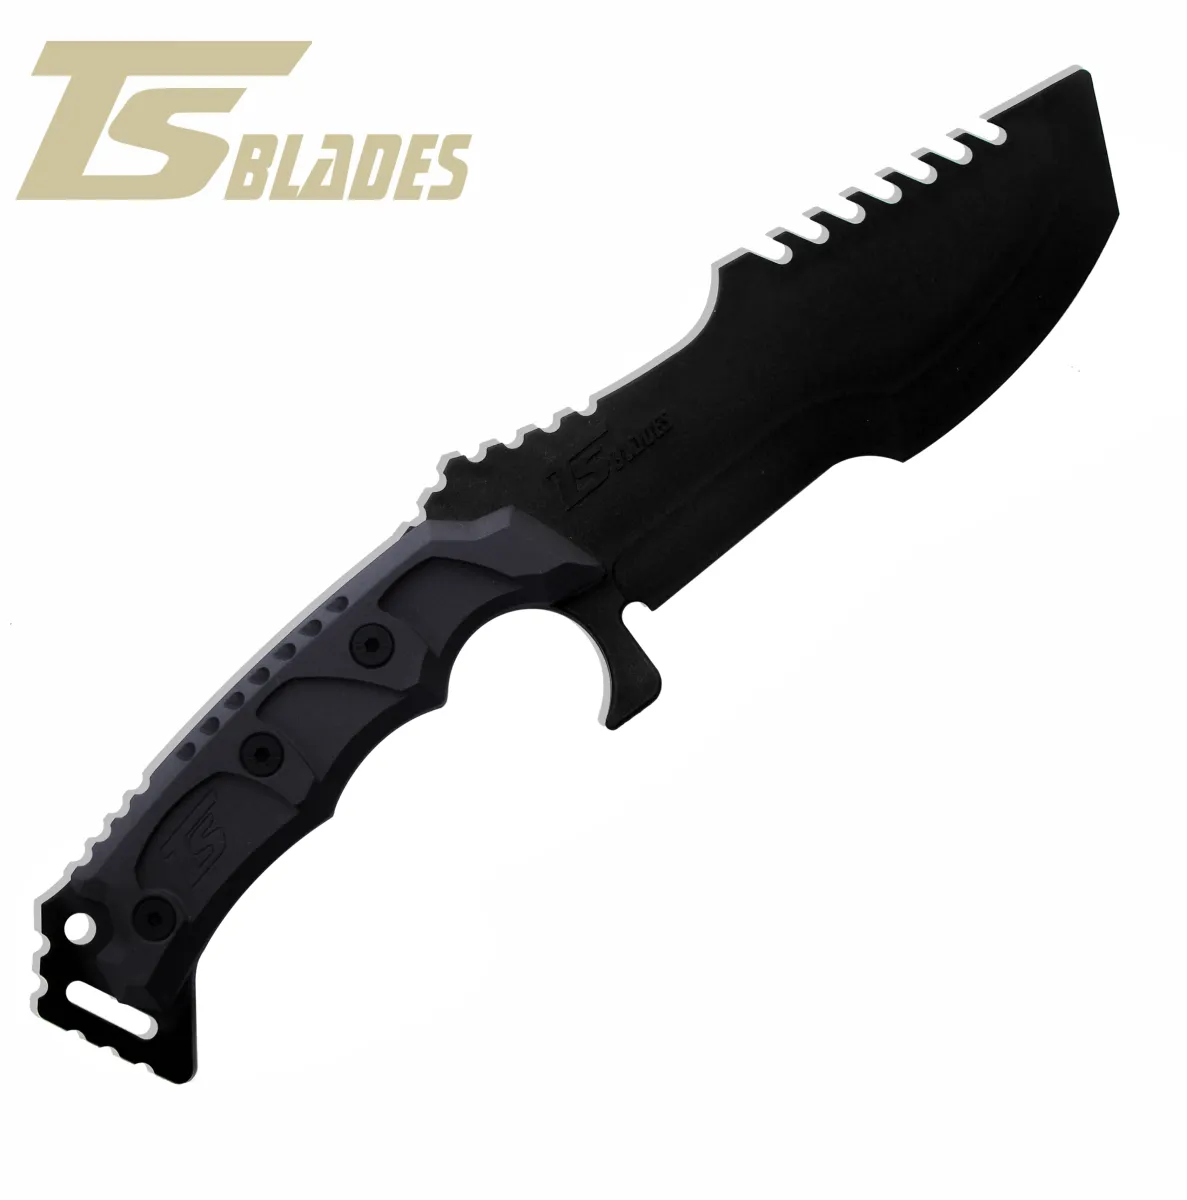 TS-BLADES HUNTSMAN G3 GRIP ONIX DUMMY KNIFE